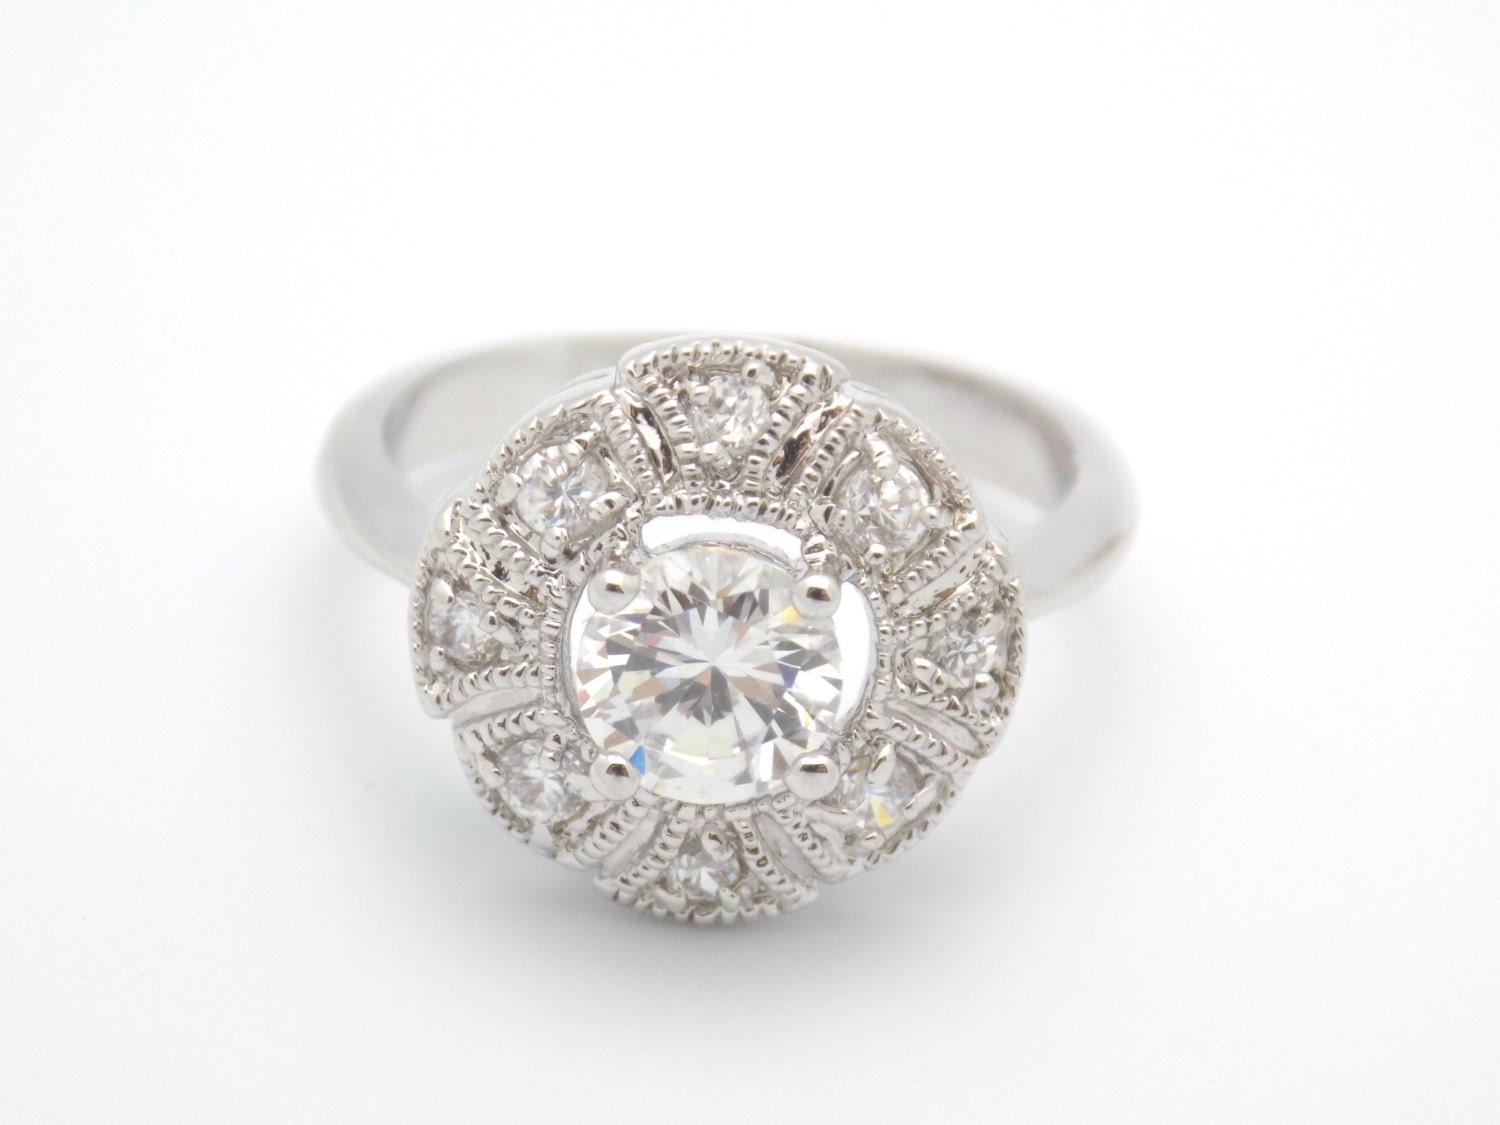 Vintage Inspired Engagement Ring 17